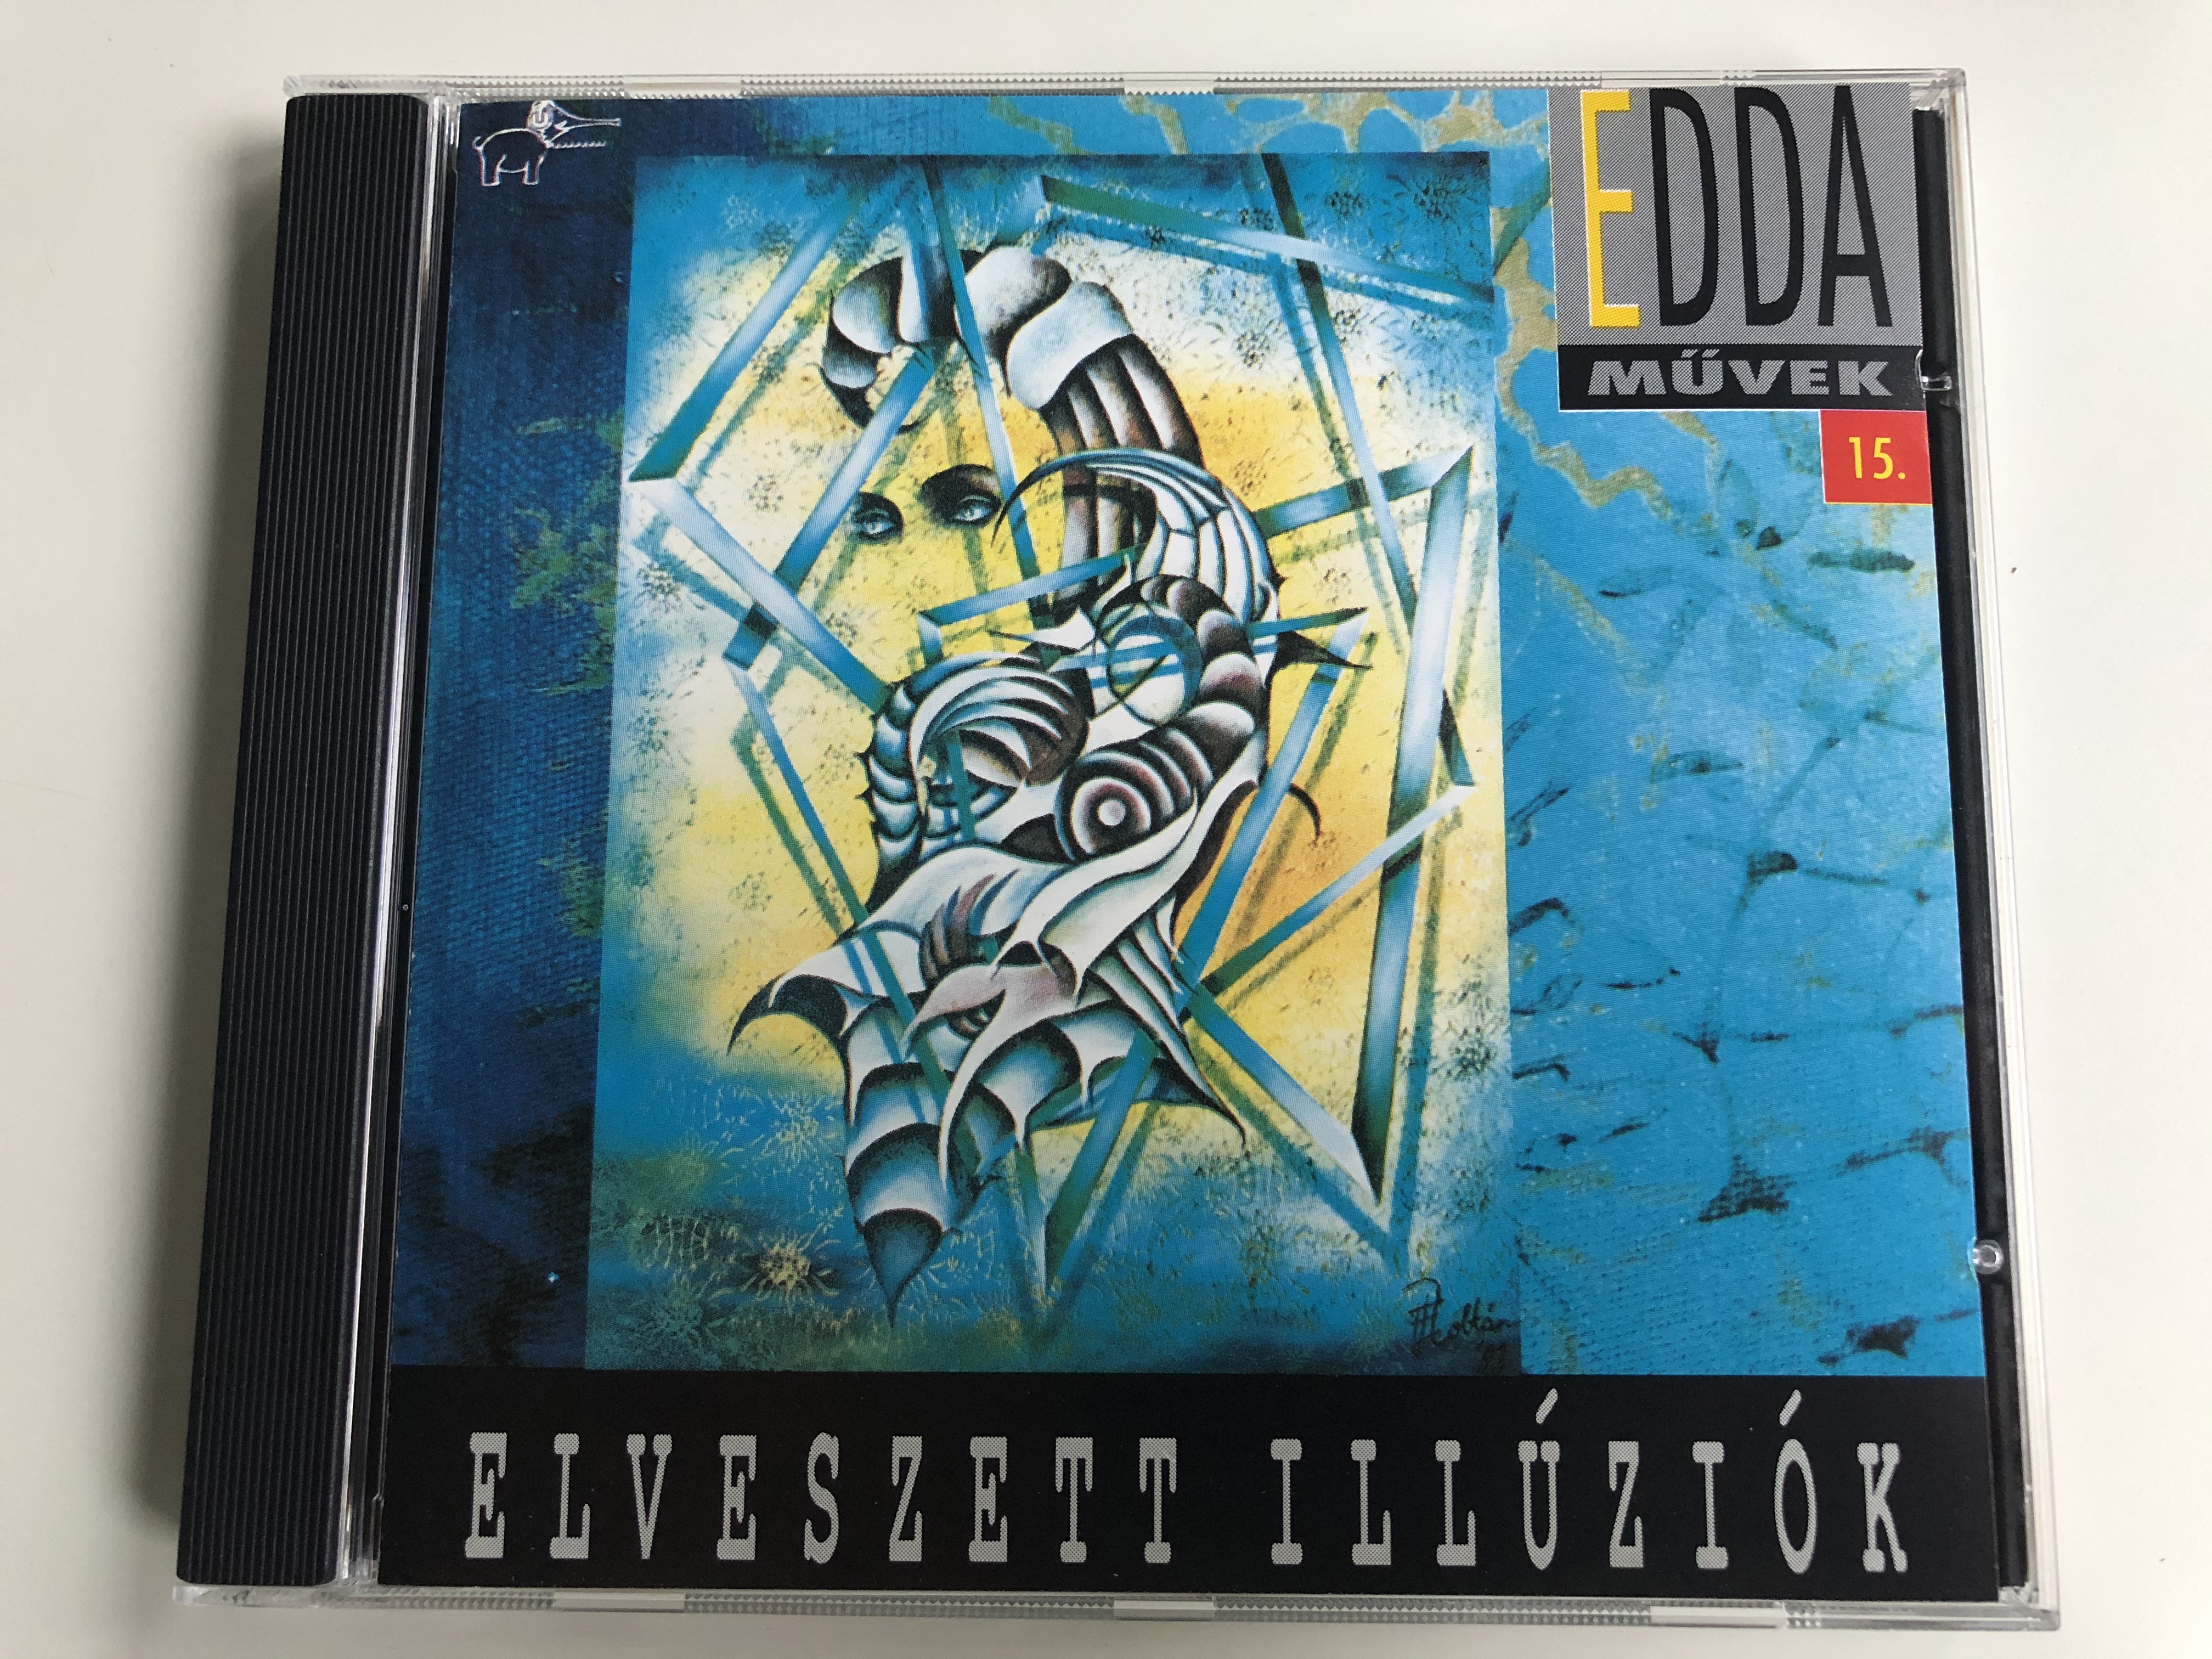 edda-m-vek-15.-elveszett-ill-zi-k-magneoton-audio-cd-1993-4509-92763-2-1-.jpg